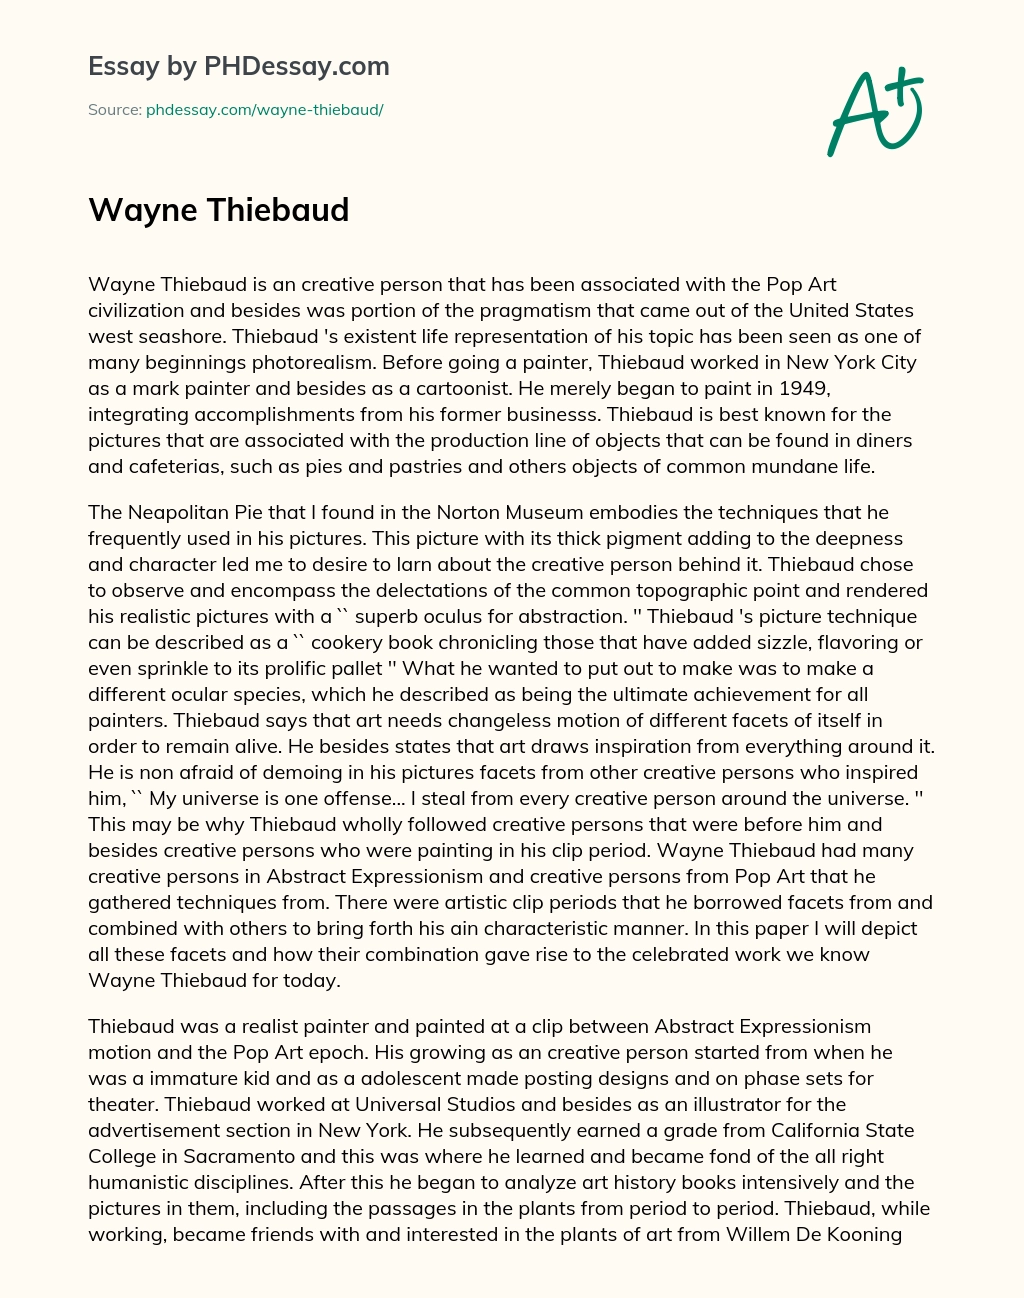 Wayne Thiebaud essay